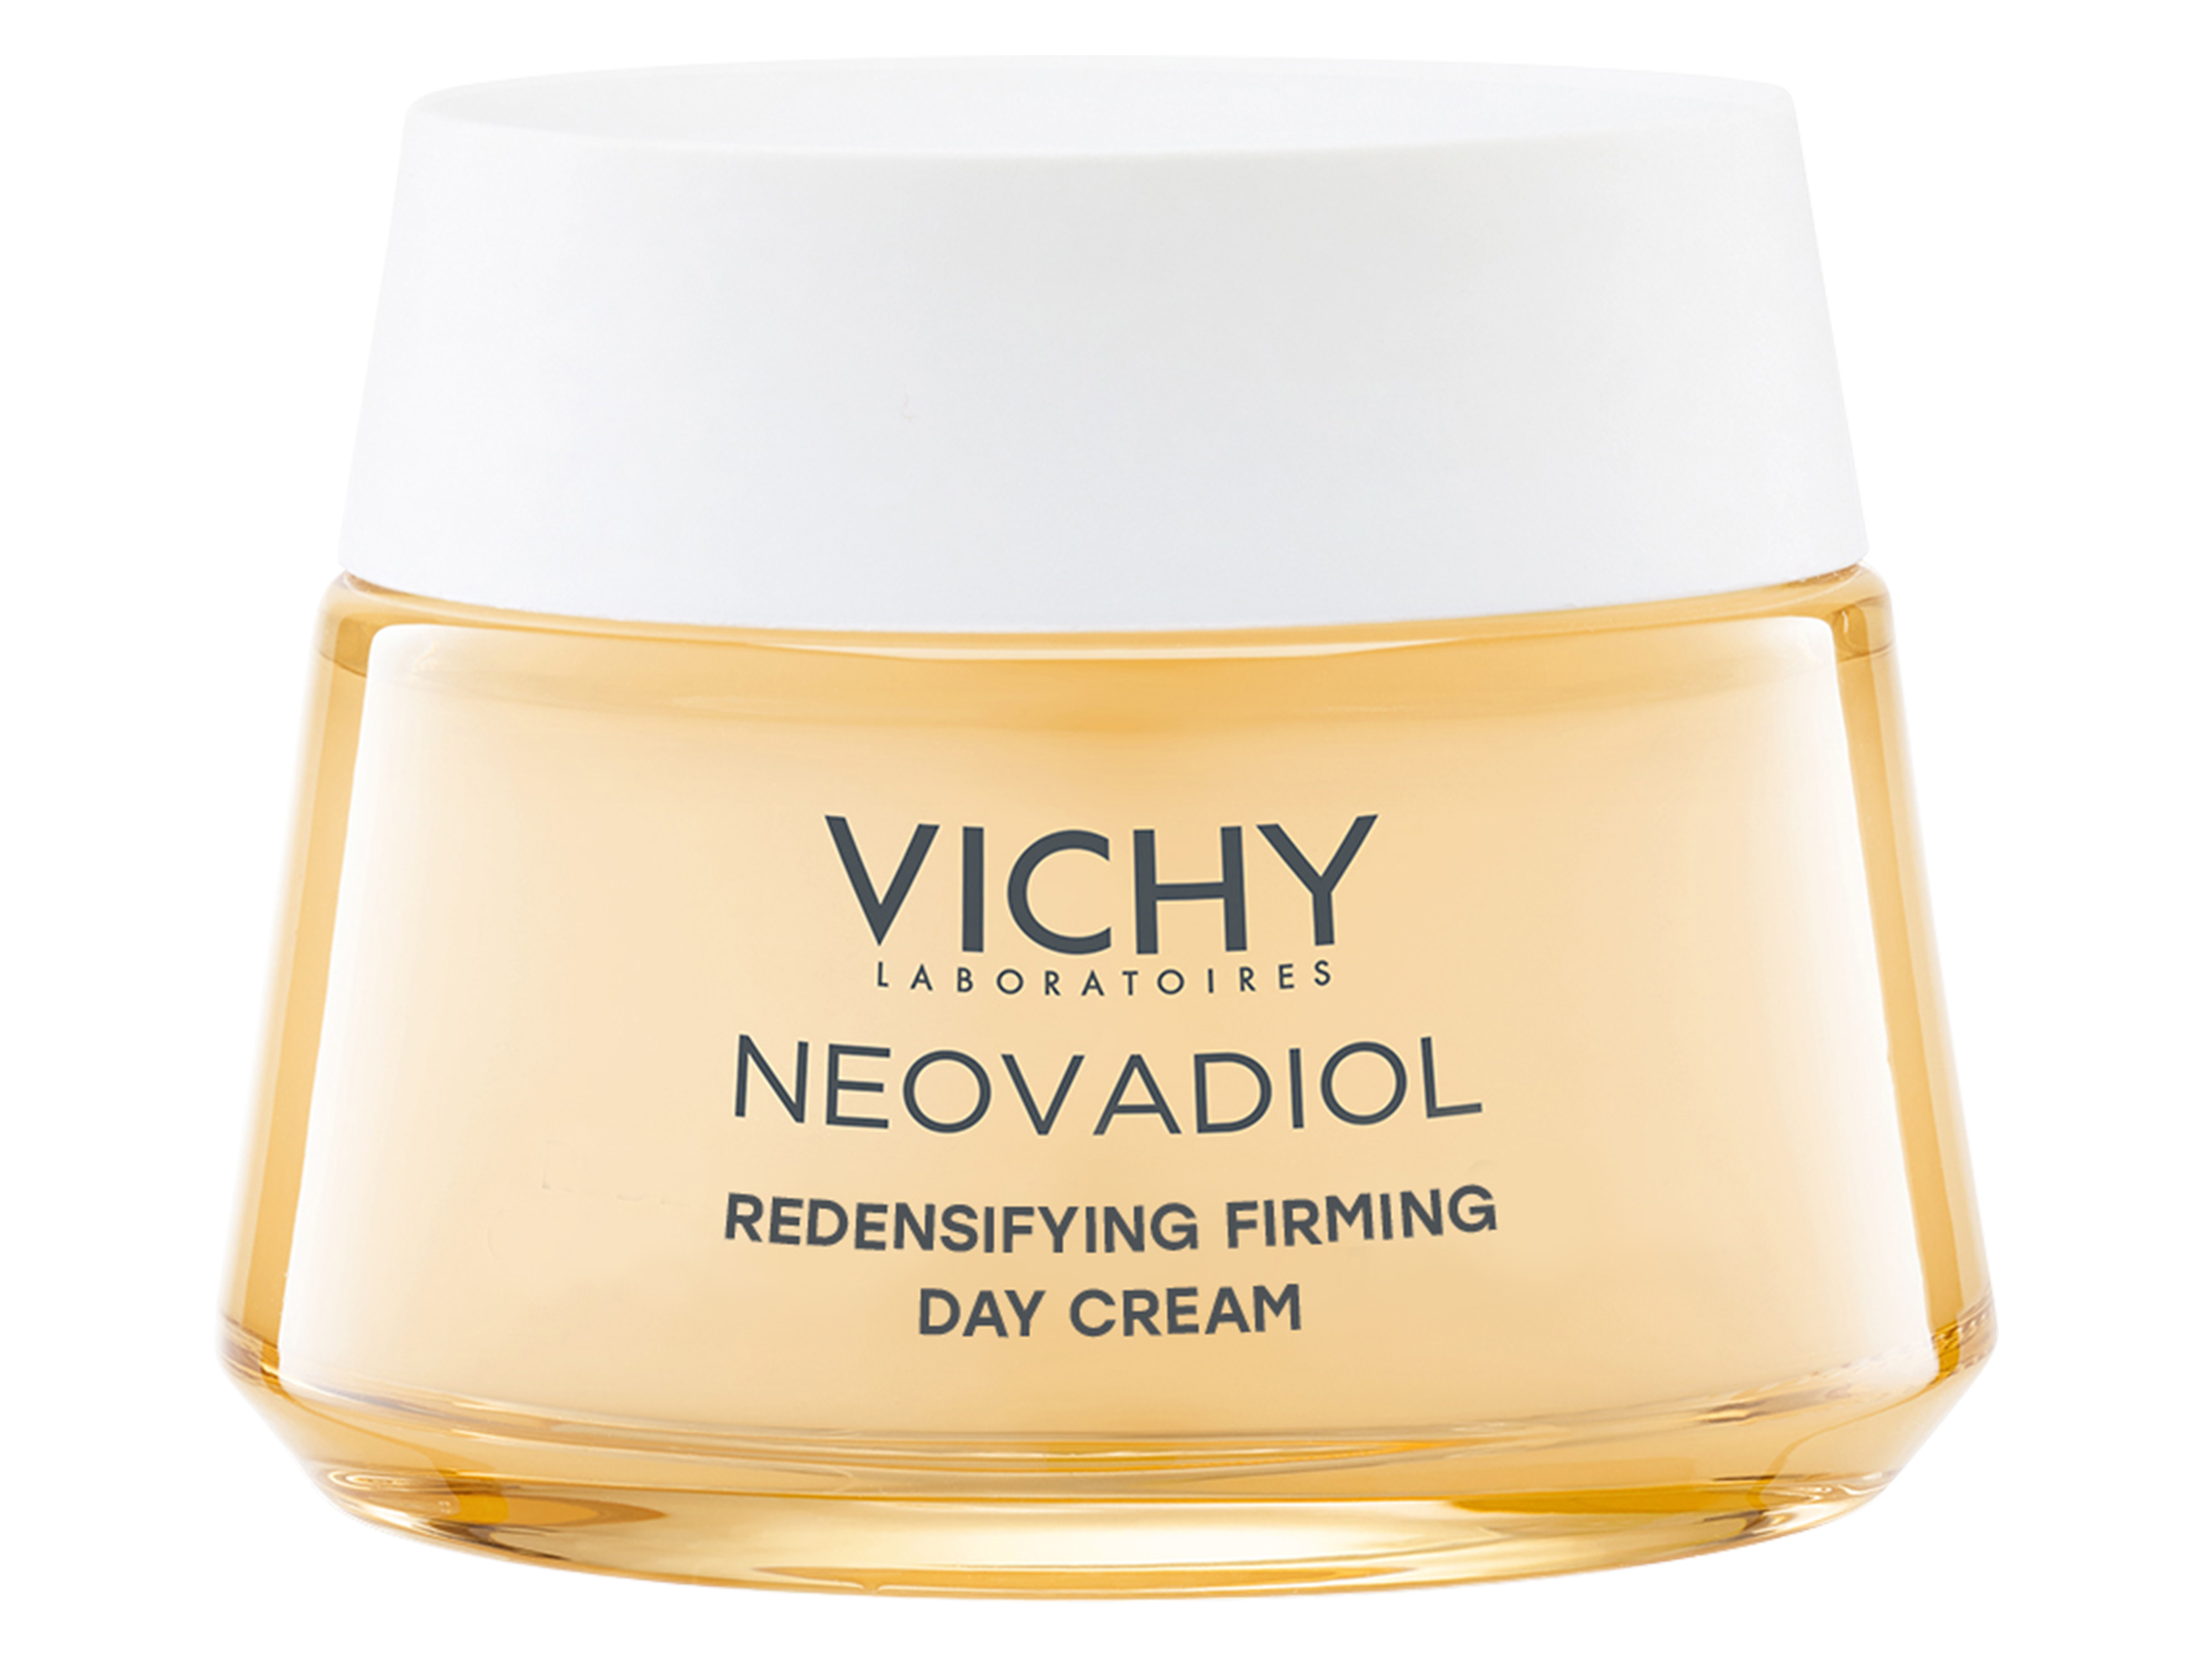 Vichy Neovadiol Redensifying Firming Day Cream, 50 ml